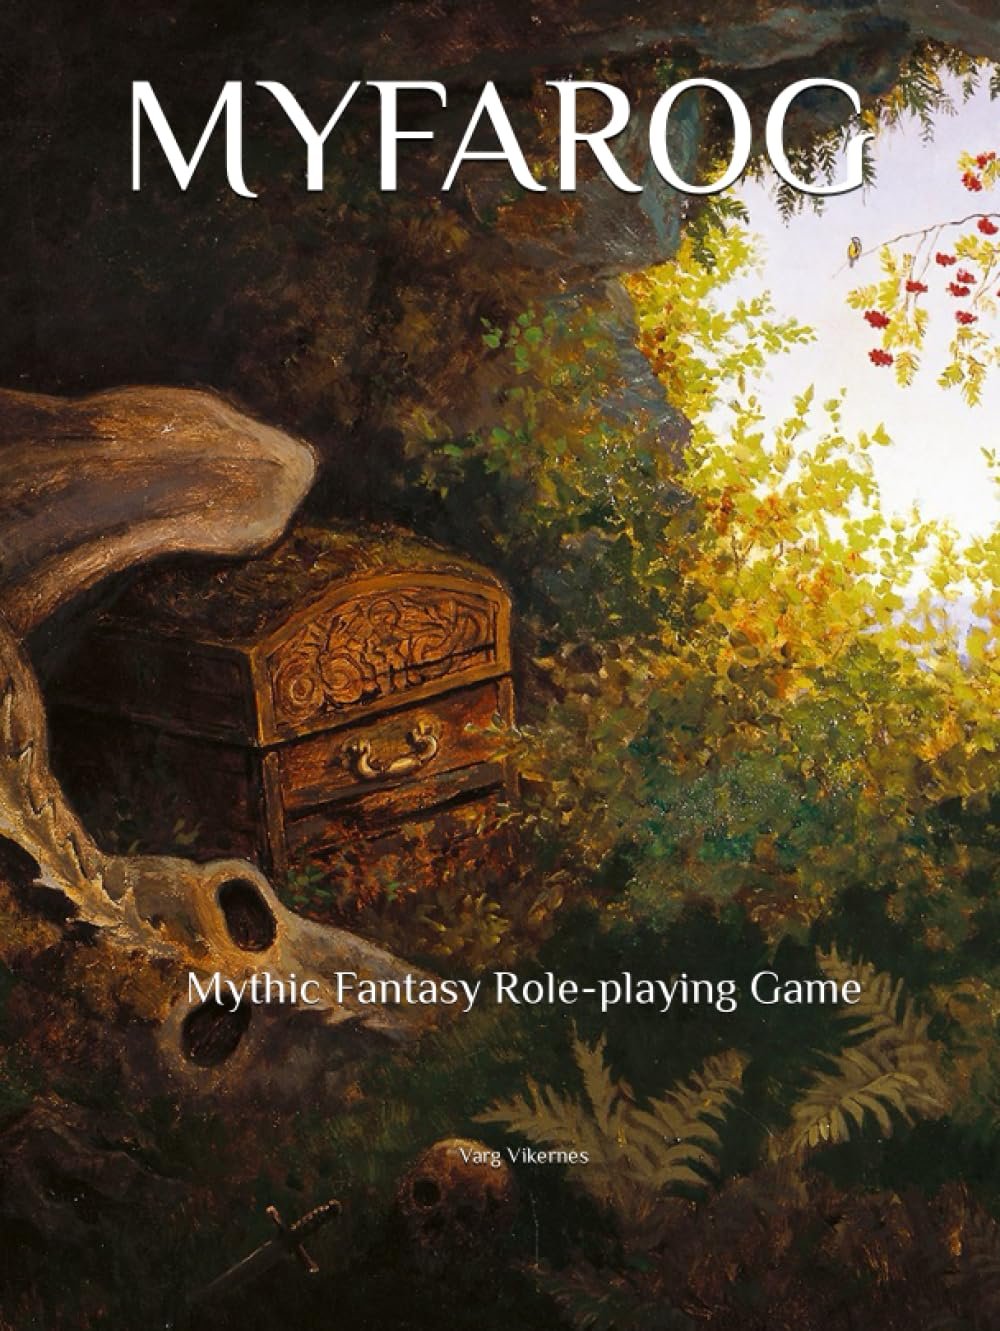 MYFAROG: Mythic Fantasy Role-playing Game Review